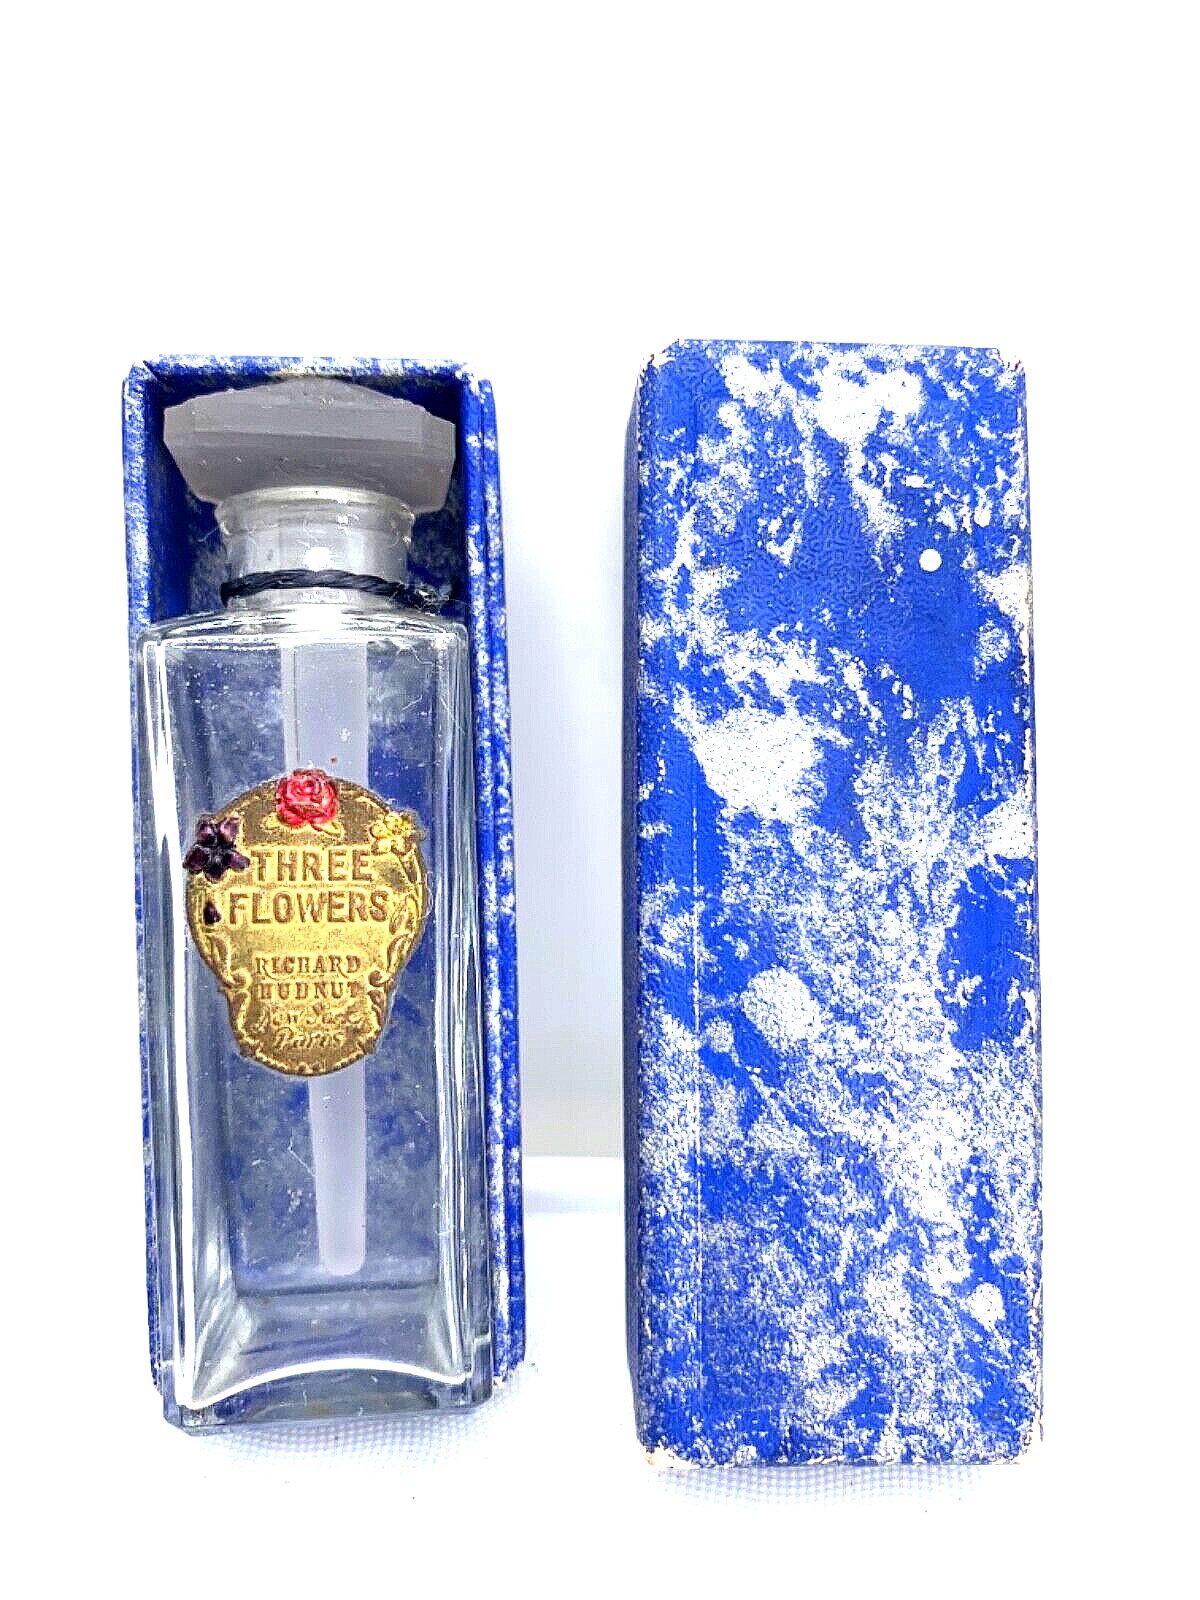 Petite  Antique perfume bottle w/box. Three Flowers,  Richard Hudnut.  c. 1910.